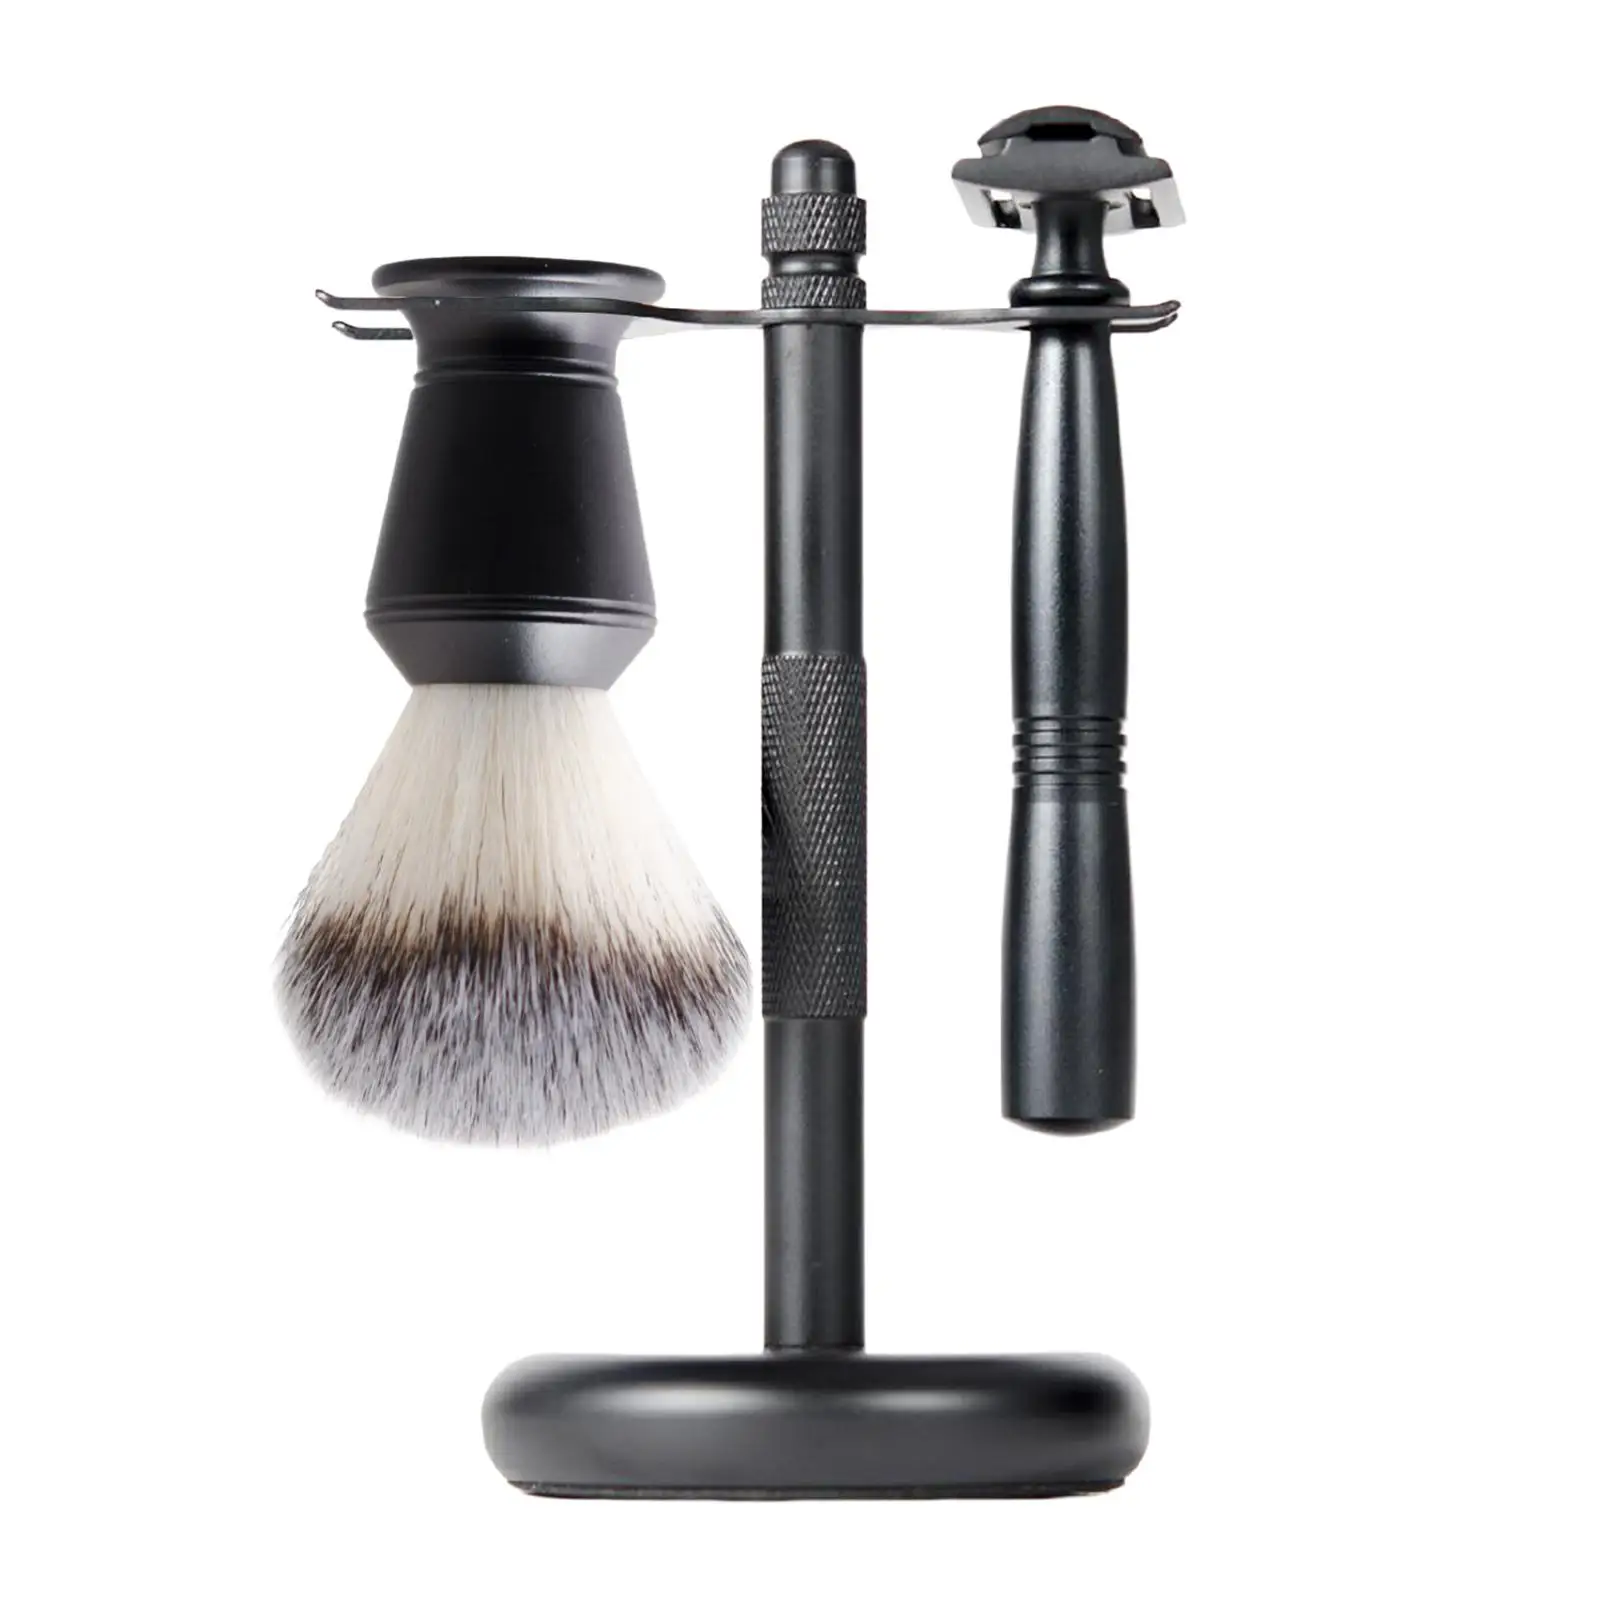 3 Pieces Mens Shaving Set Black Color Shaving Brush Shaving Brush Stand Kit Shaving Razor+ Stand Holder +shaving Brush Set